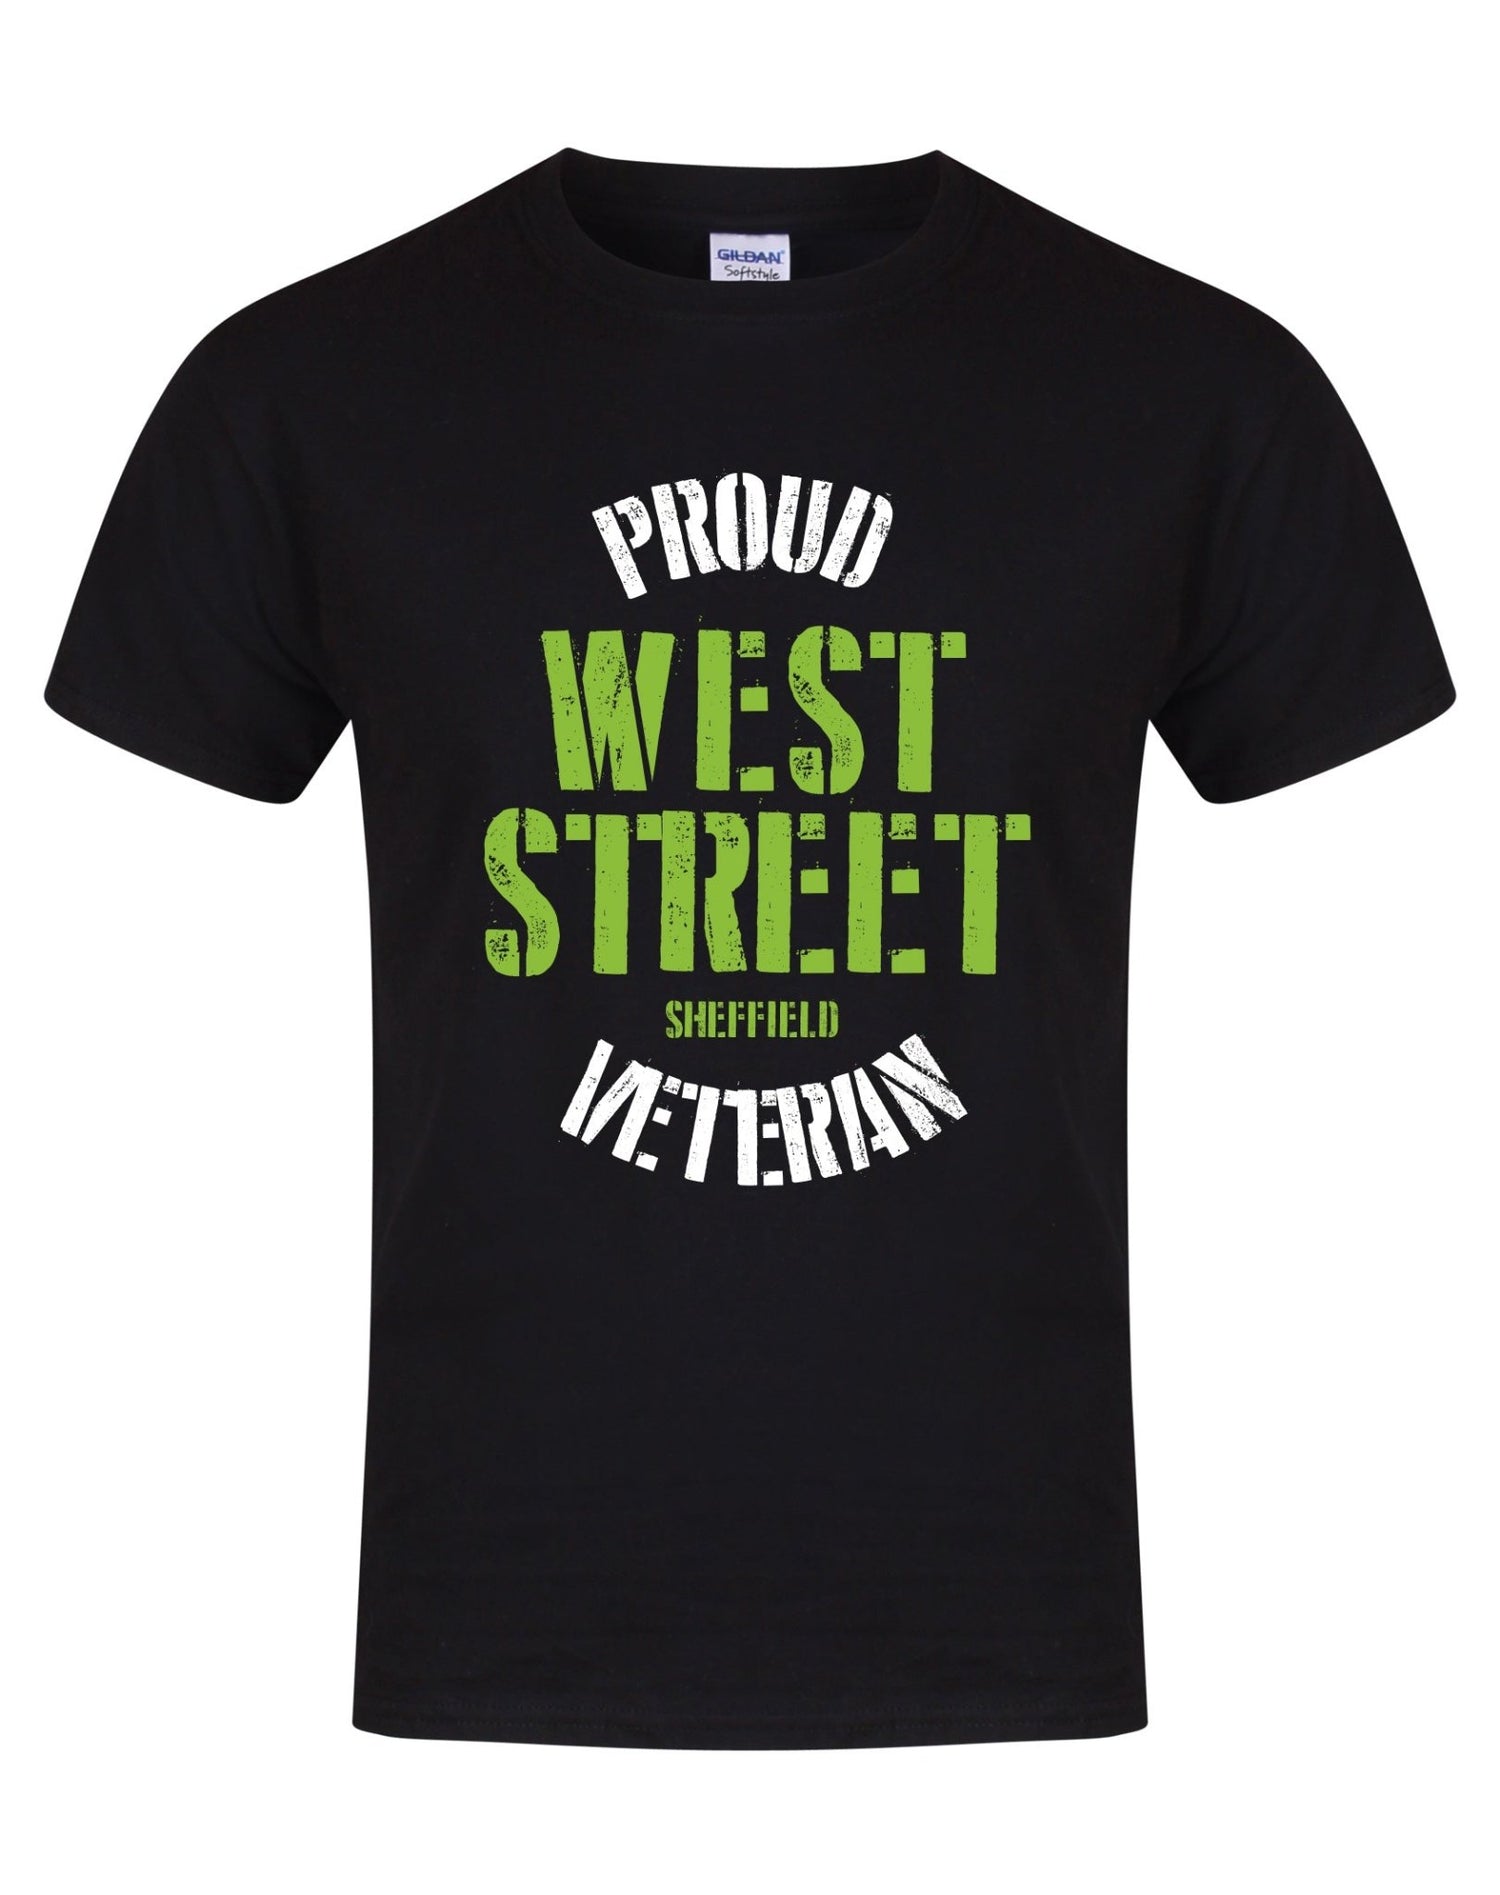 West Street